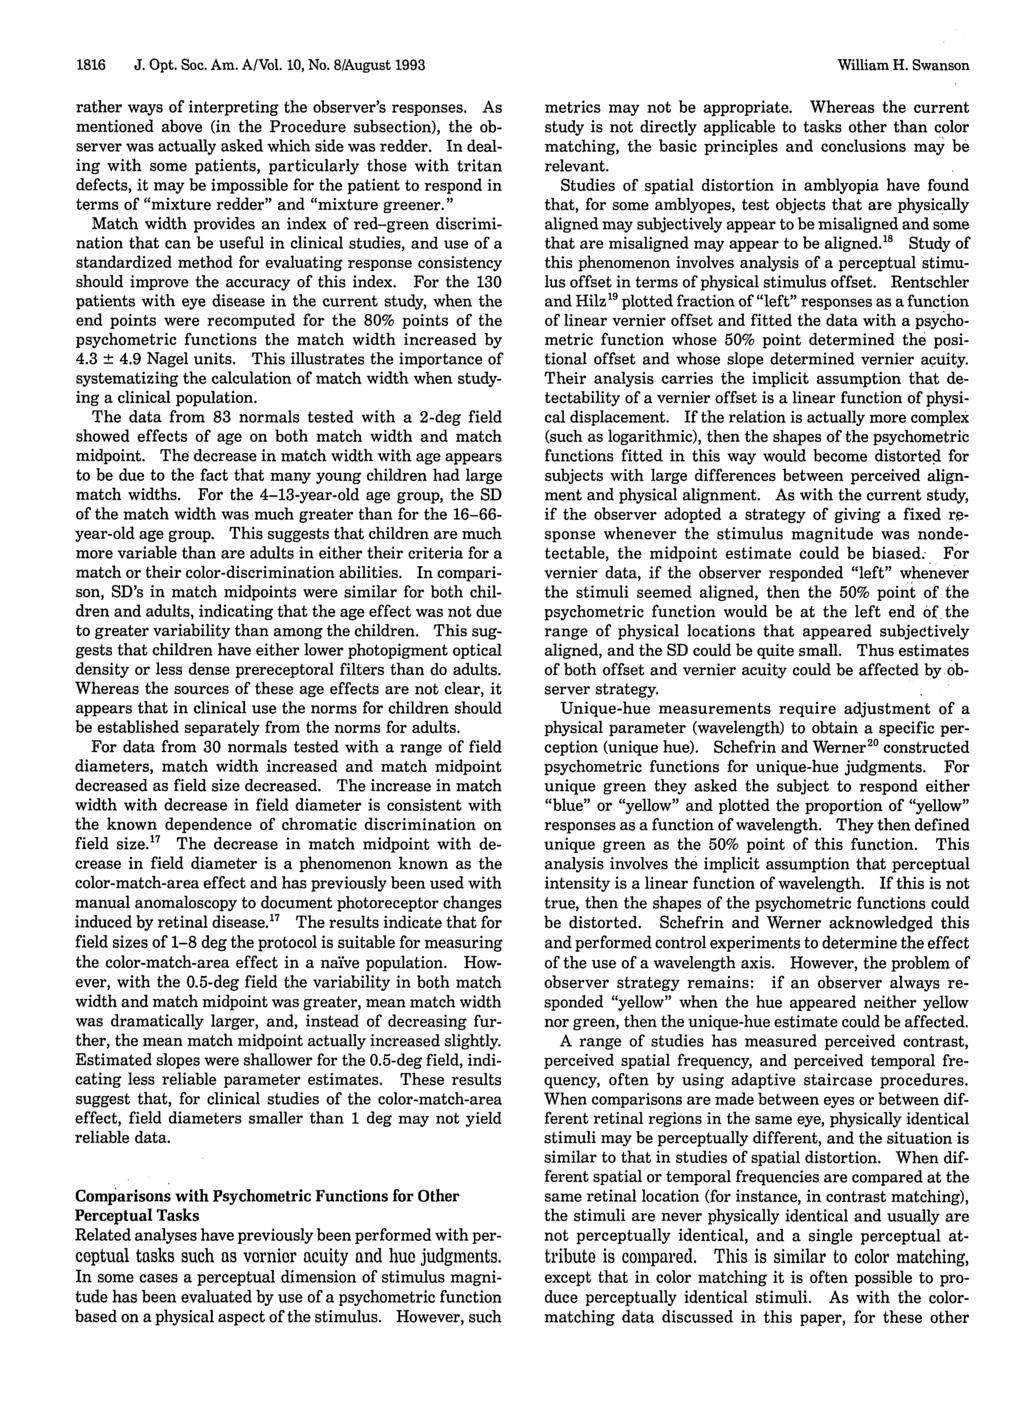 1816 J. Opt. Soc. Am. A/Vol. 1, No. 8/August 1993 rather ways of interpreting the observer's responses.